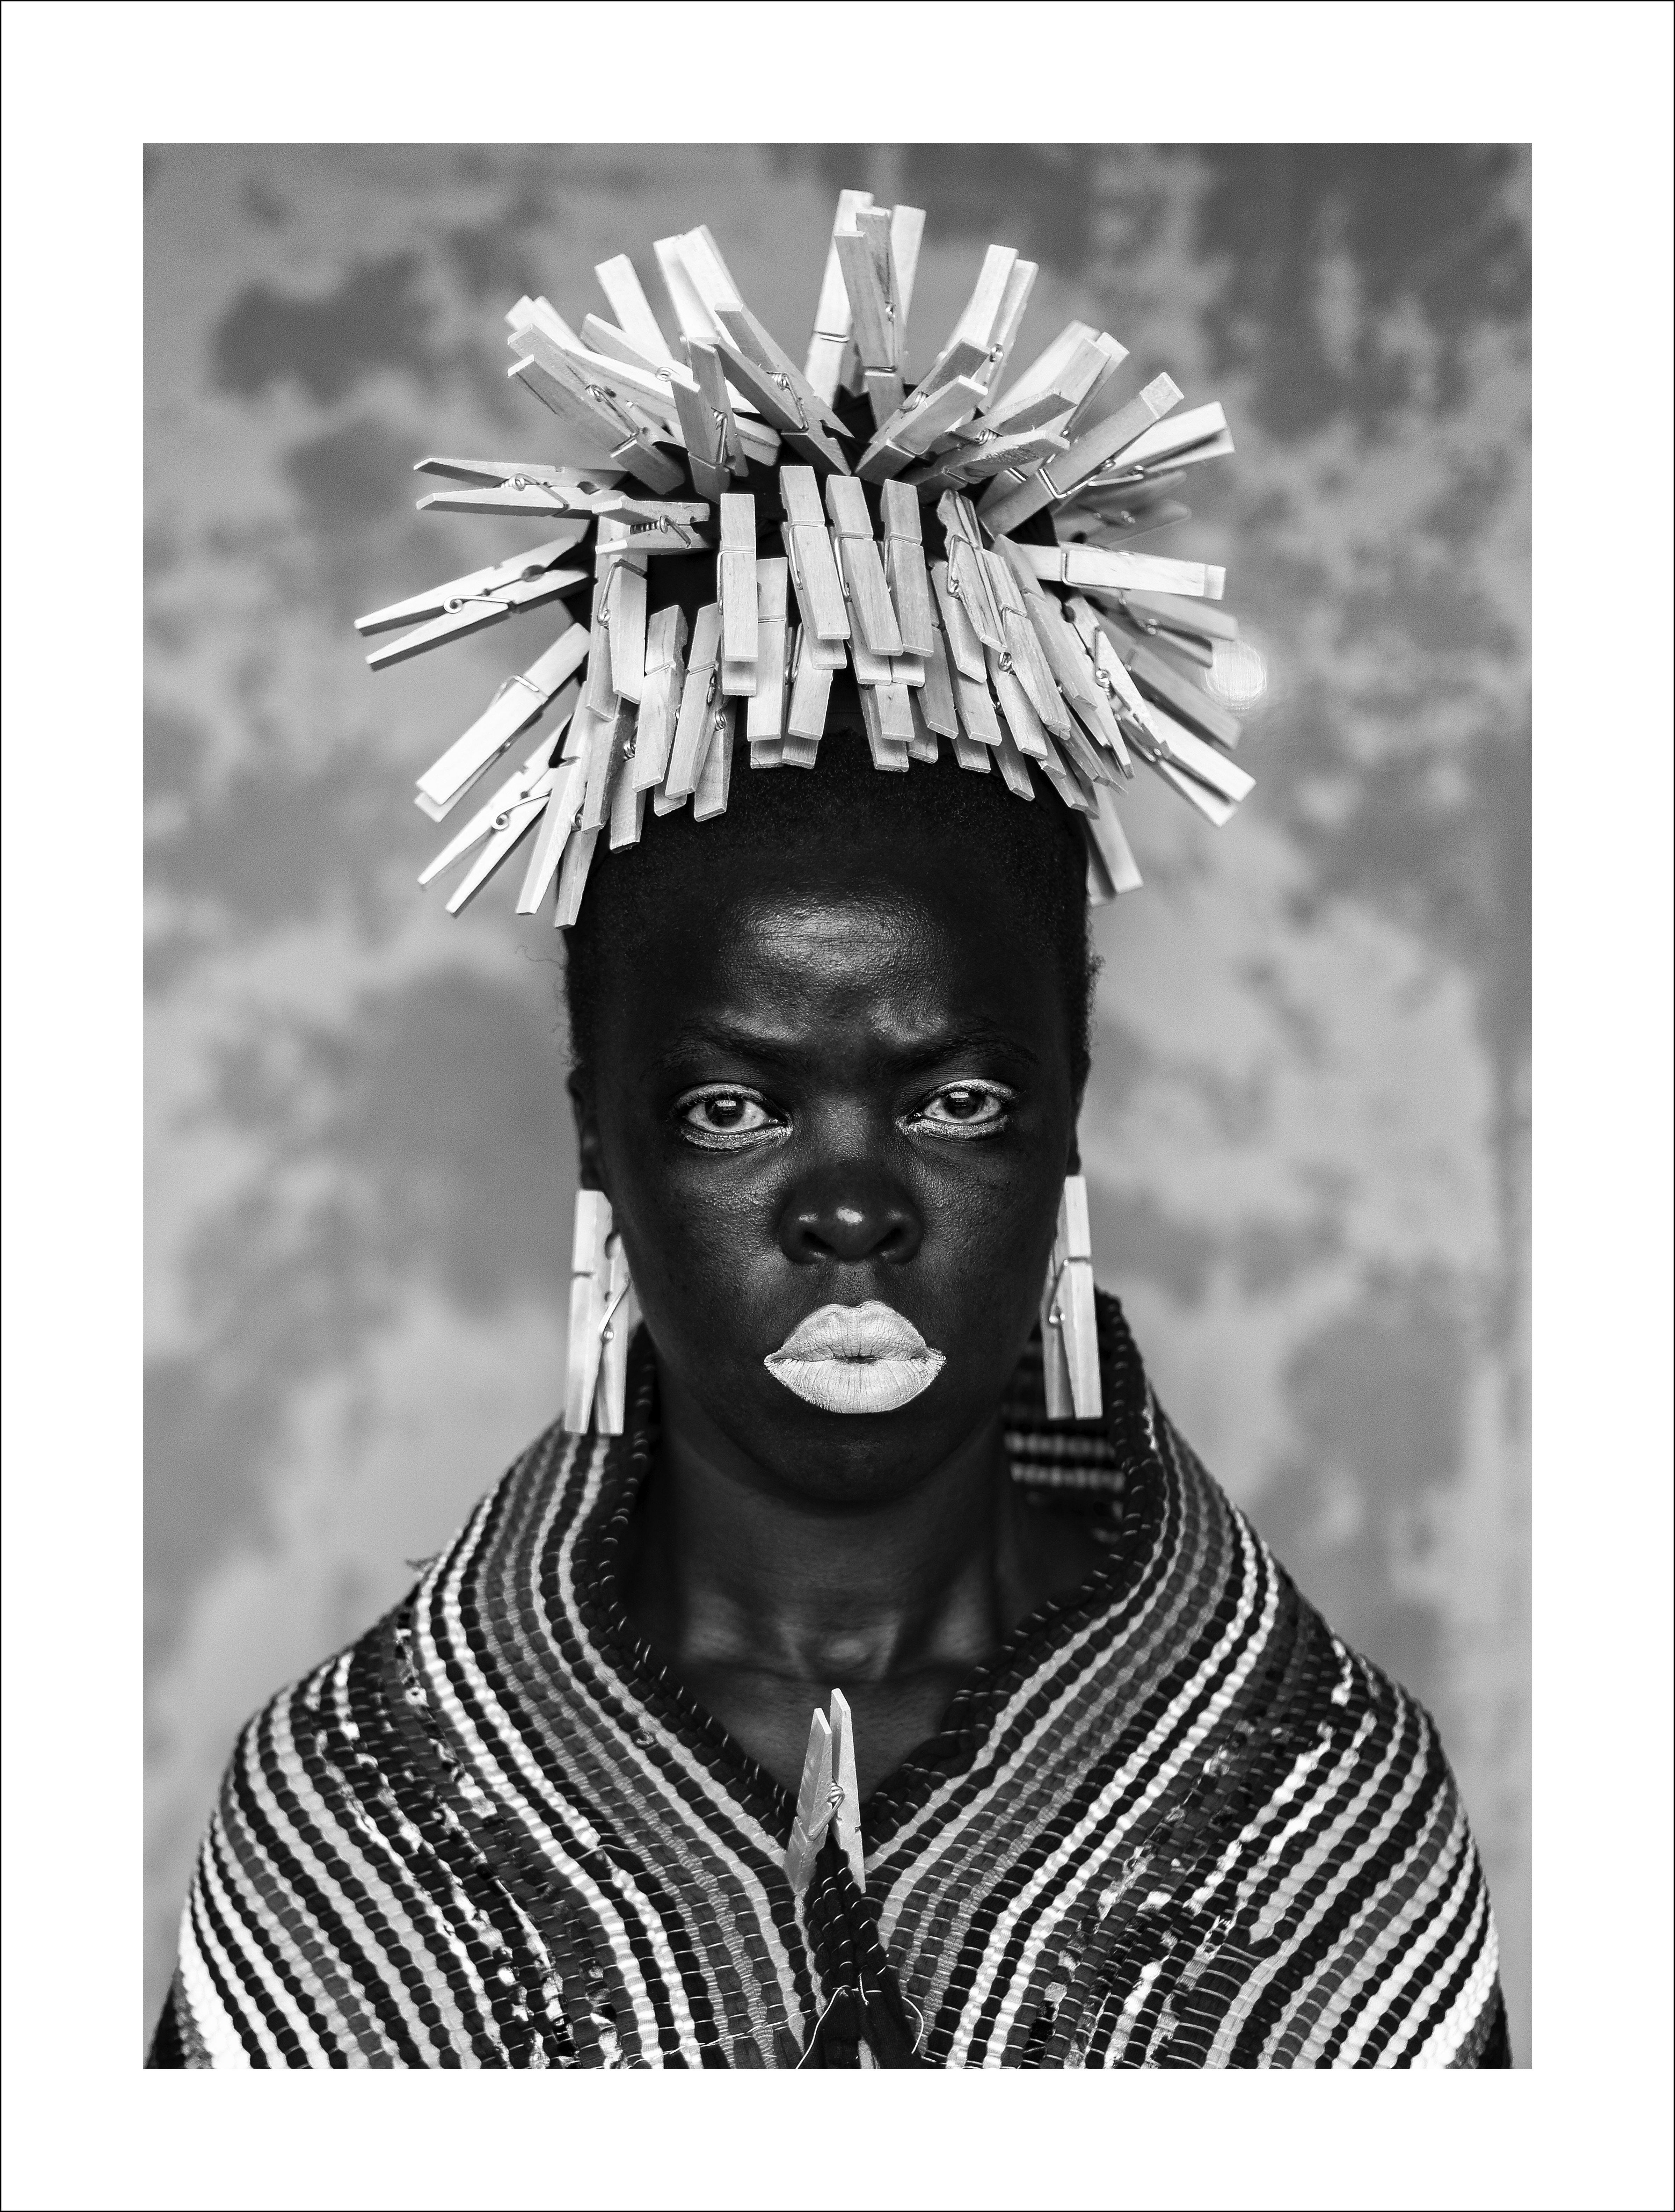 'Bester I', Mayotte, 2015. Zanele Muholi. Cortesía de la artista  y Stevenson, Cape Town_Johannesburg_Amsterdam and Yancey Richardson, New York.